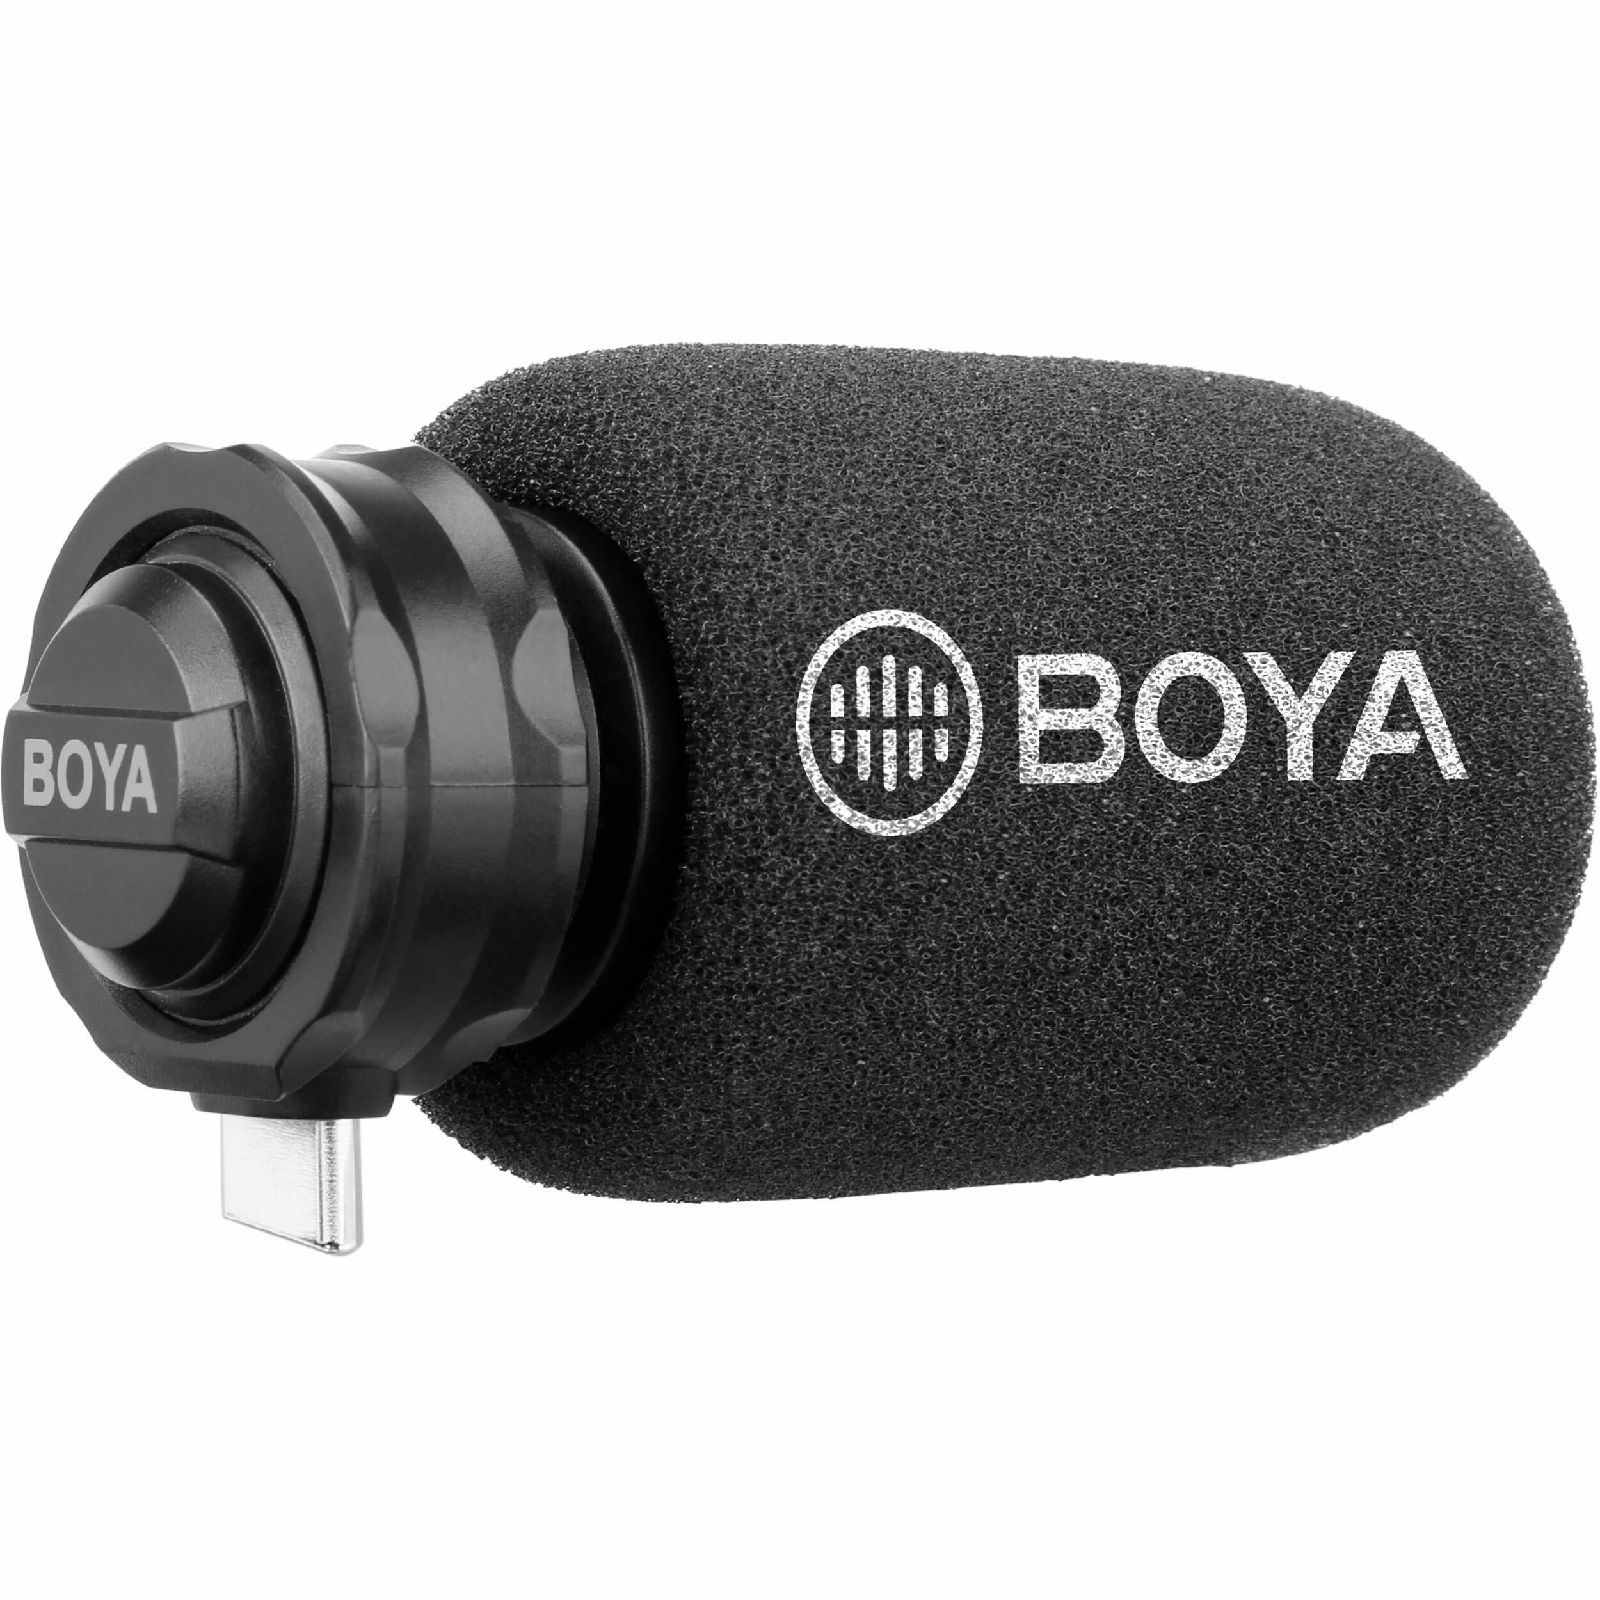 Boya BY-DM100 Shotgun Digital mikrofon for Android USB-C